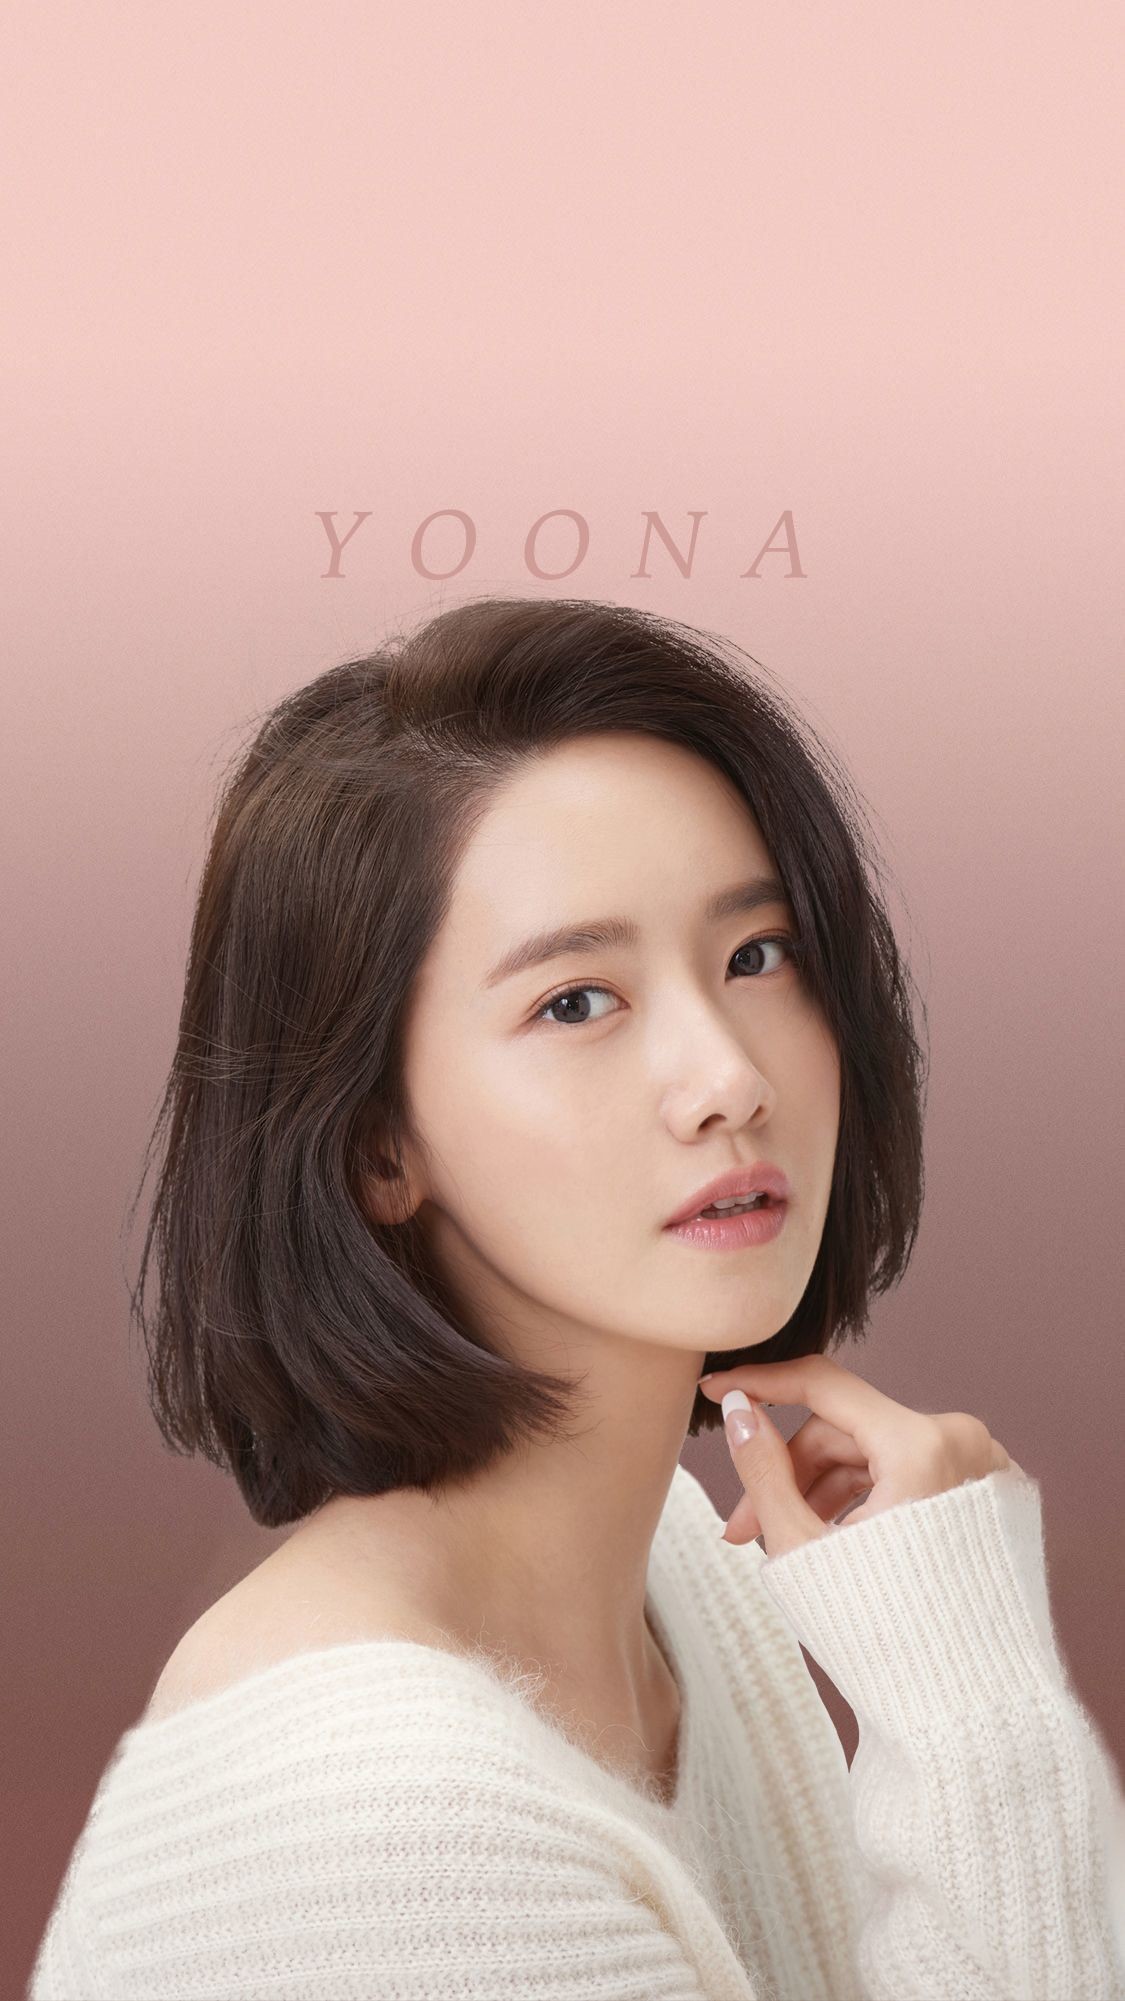 yoona wallpaper,hair,face,eyebrow,hairstyle,chin